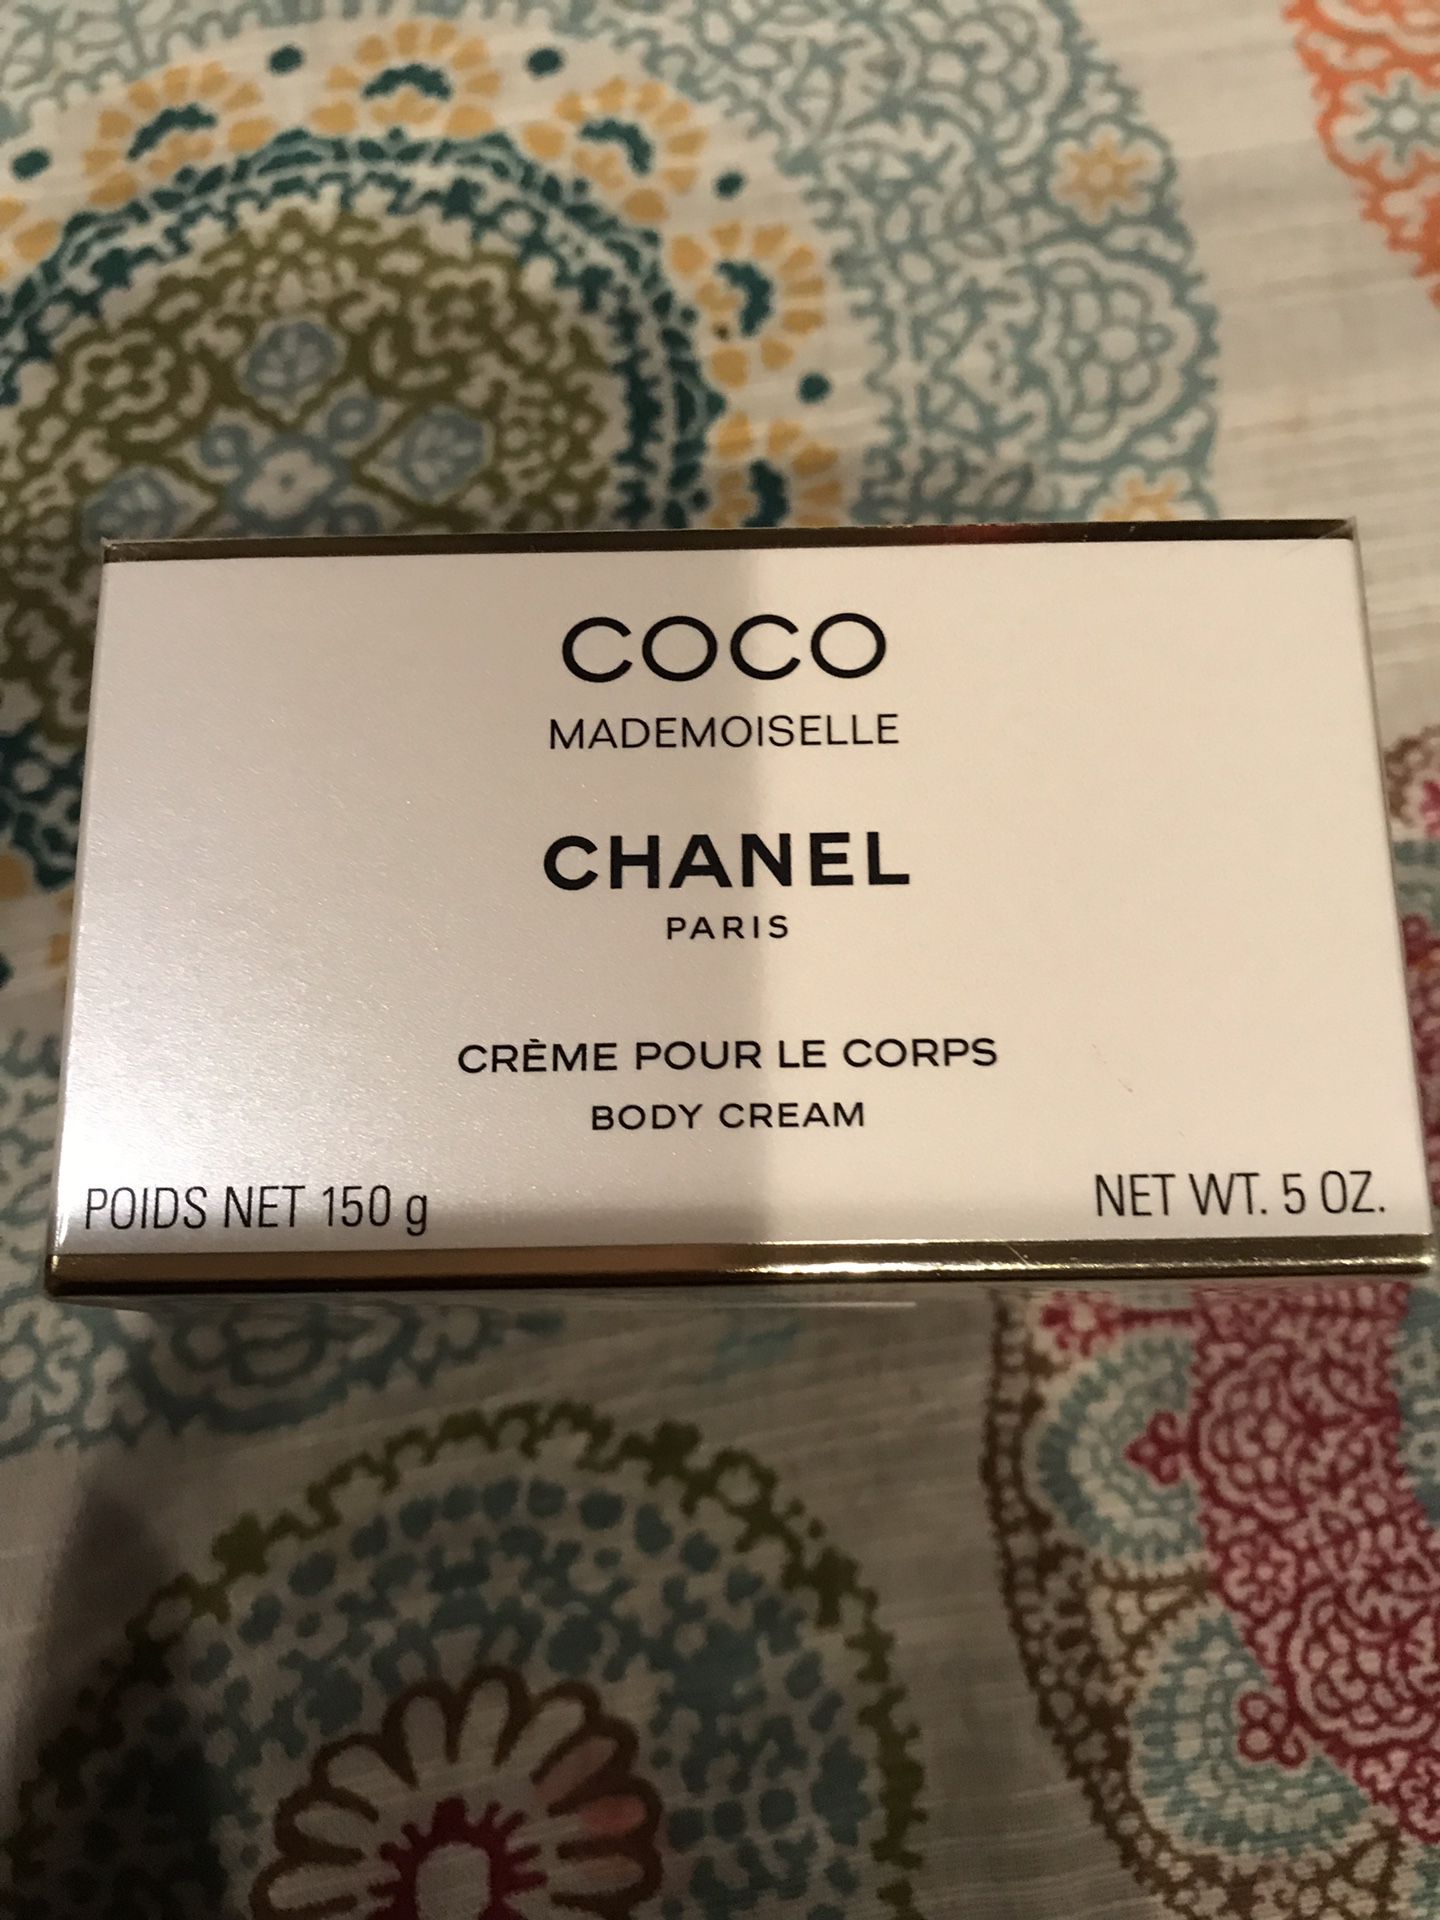 Coco mademoiselle Chanel BODY CREAM for Sale in San Jose, CA - OfferUp